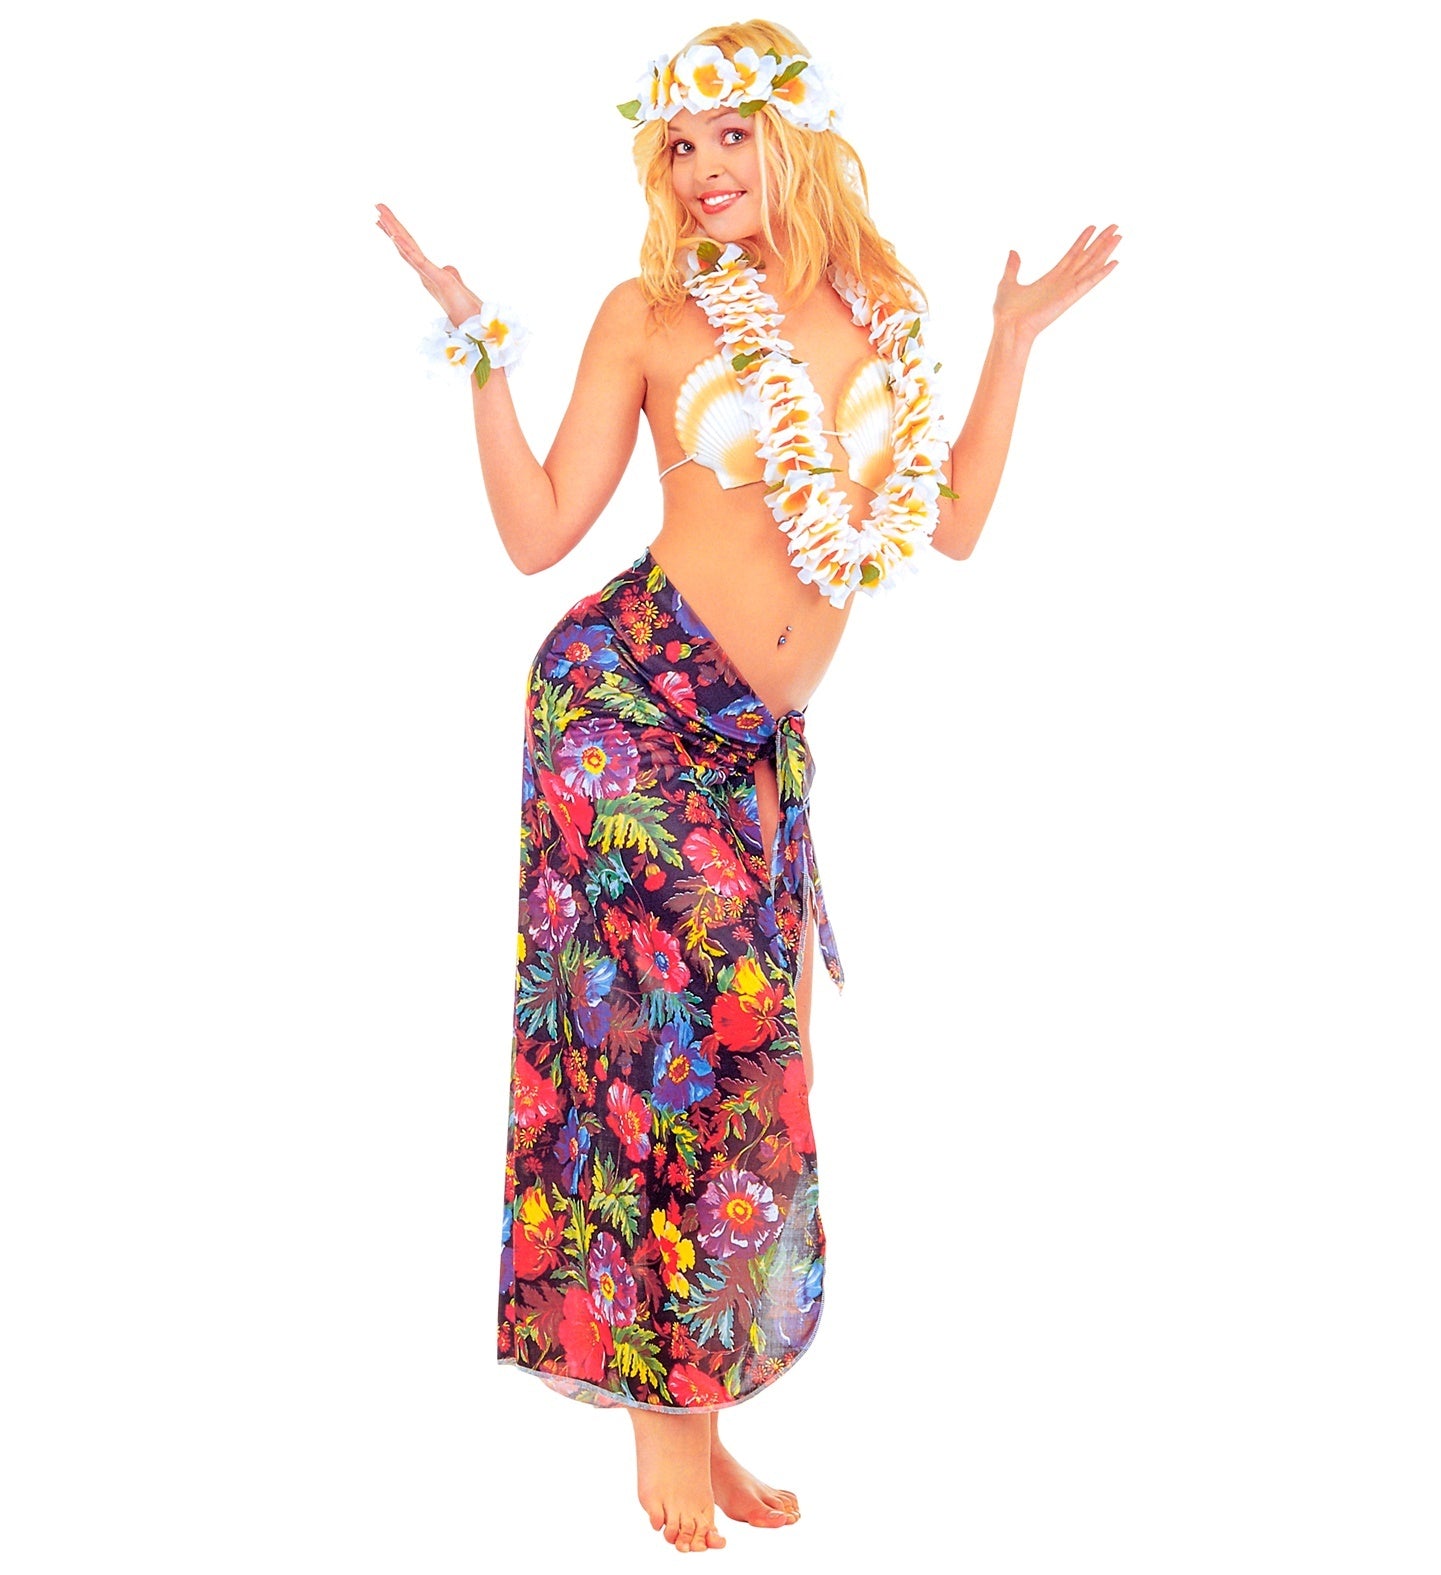 Widmann - Hawaii & Carribean & Tropisch Kostuum - Omslagdoek Hawaii Beach Flower Furie Vrouw - zwart,multicolor - One Size - Carnavalskleding - Verkleedkleding